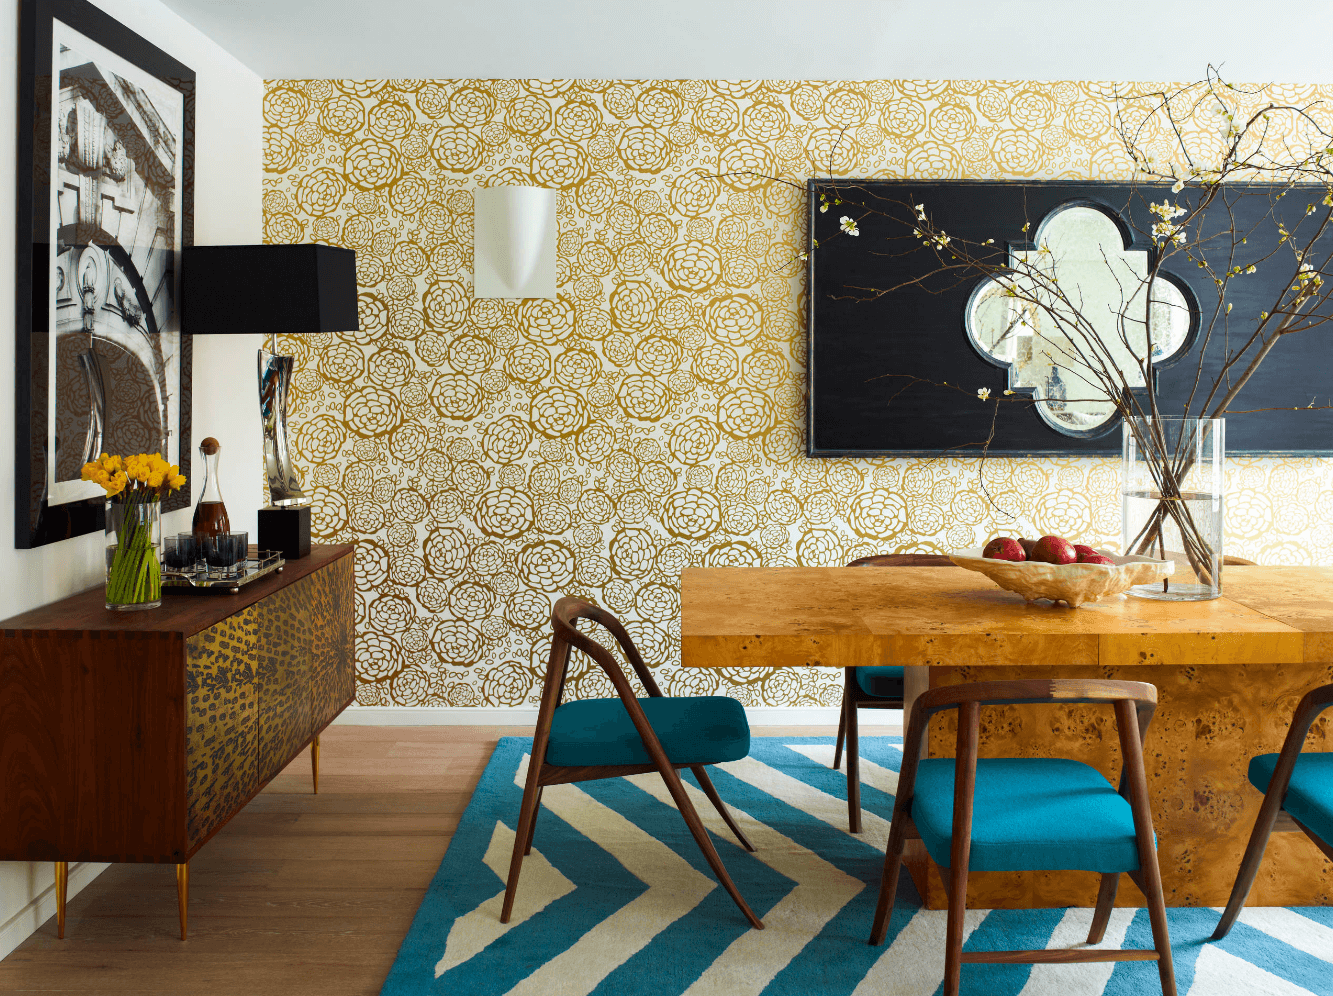 Stunning Wallpaper Ideas Your Home Needs